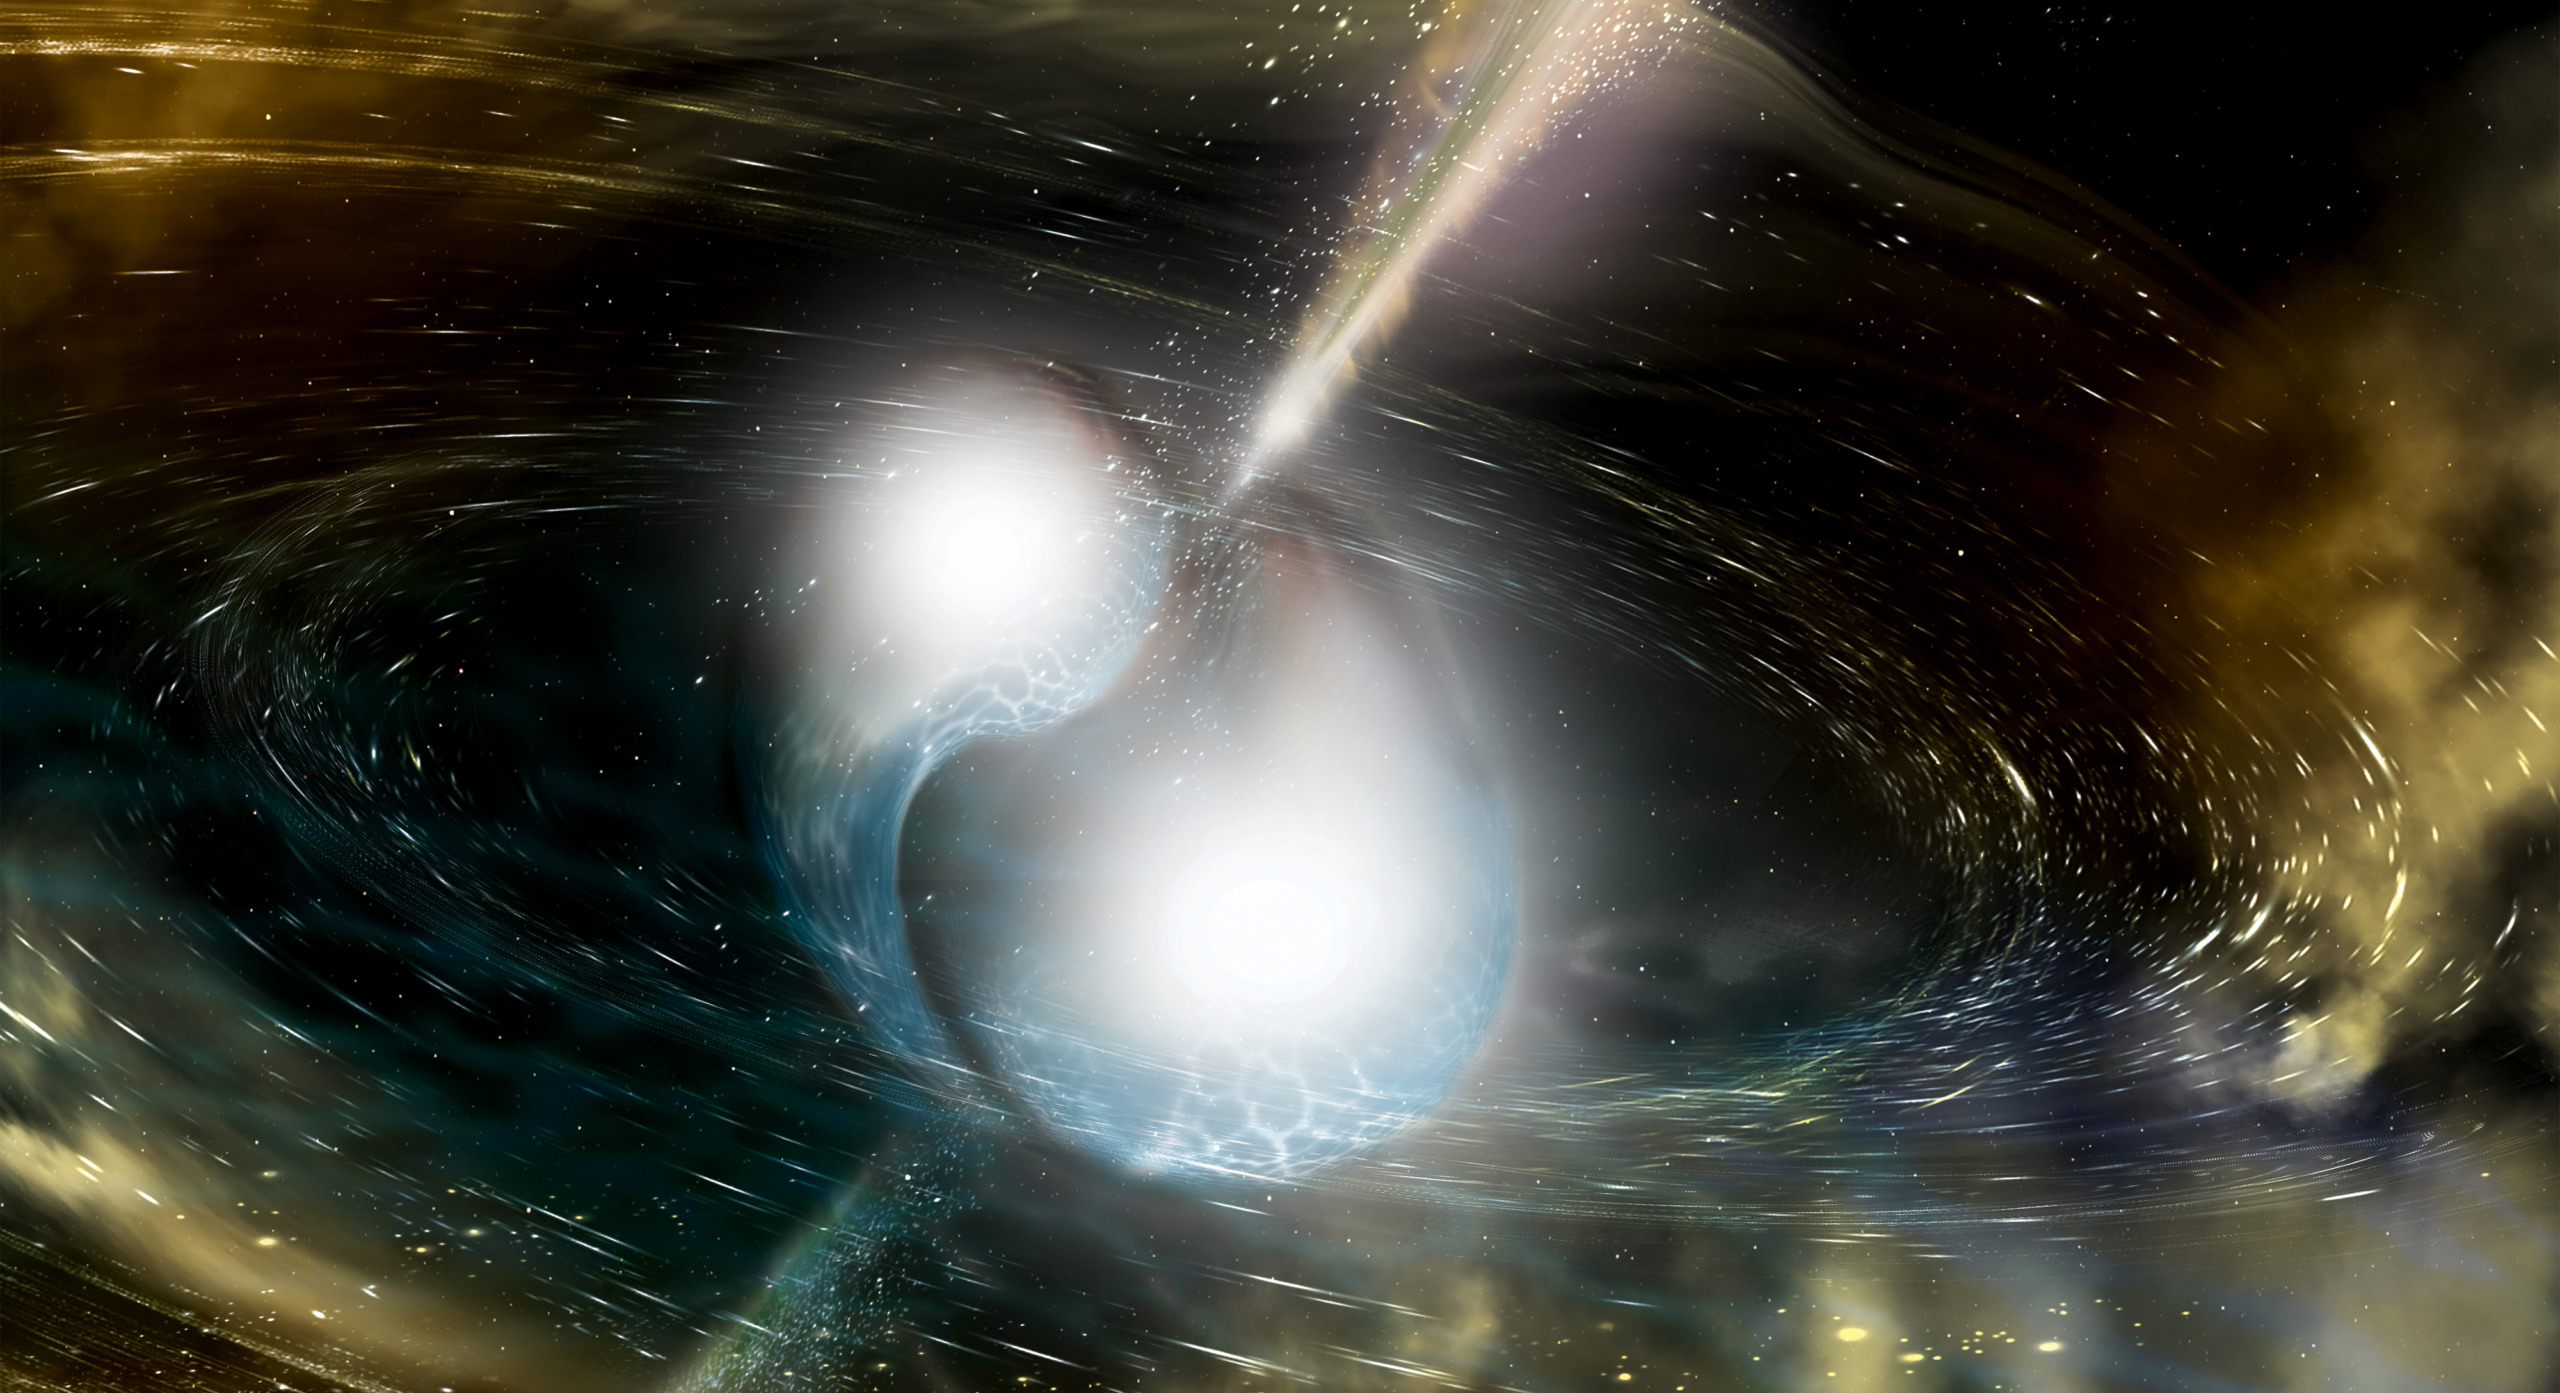 Shock between two neutron stars